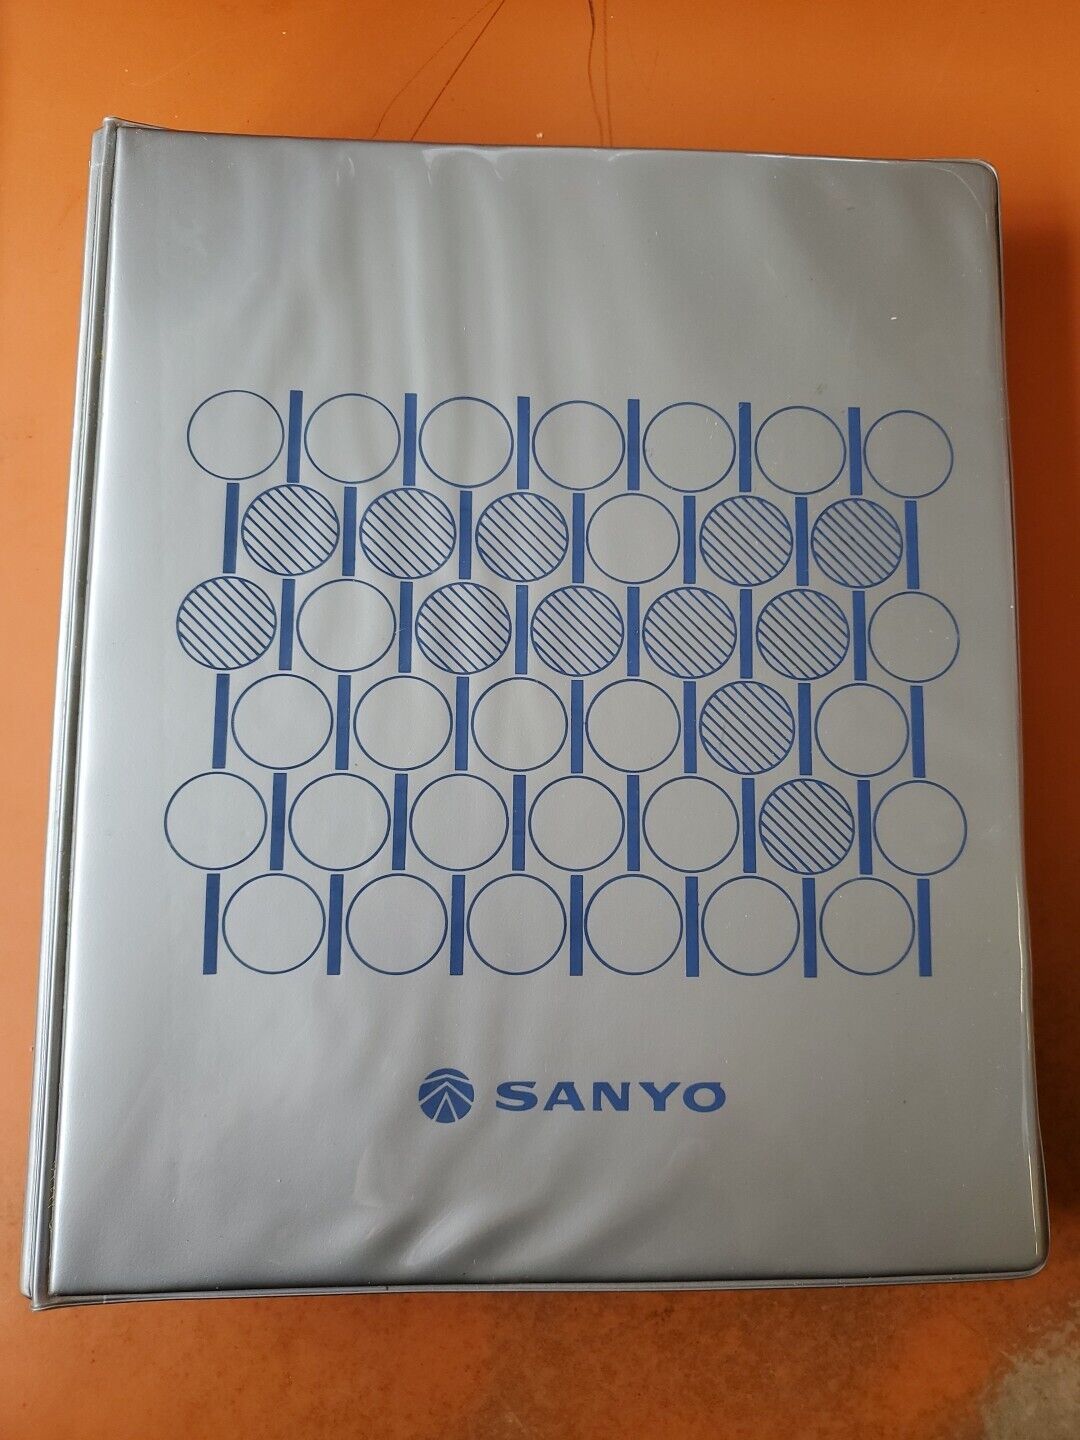 Sanyo Software MBC-550 Series Word Star Calcstar by Micropro Manual- No Disk